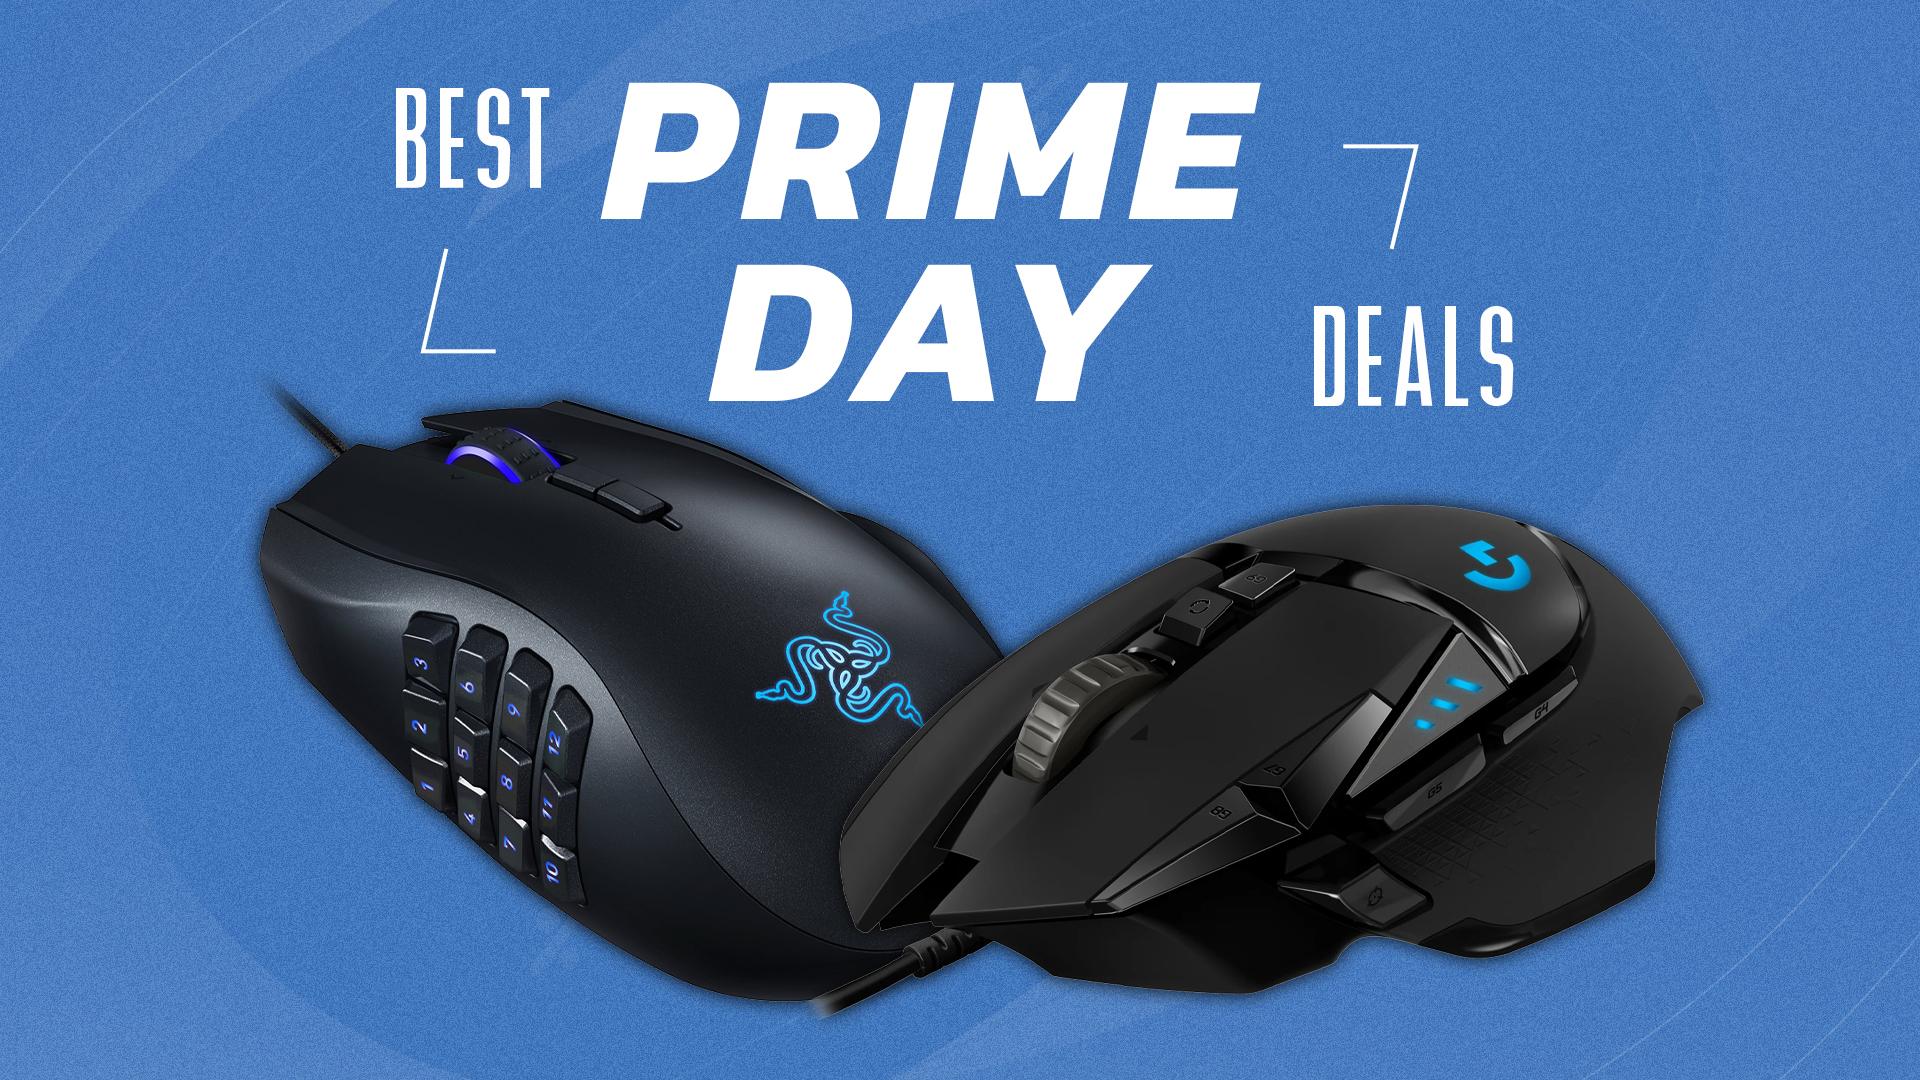 Prime Day mouse deals